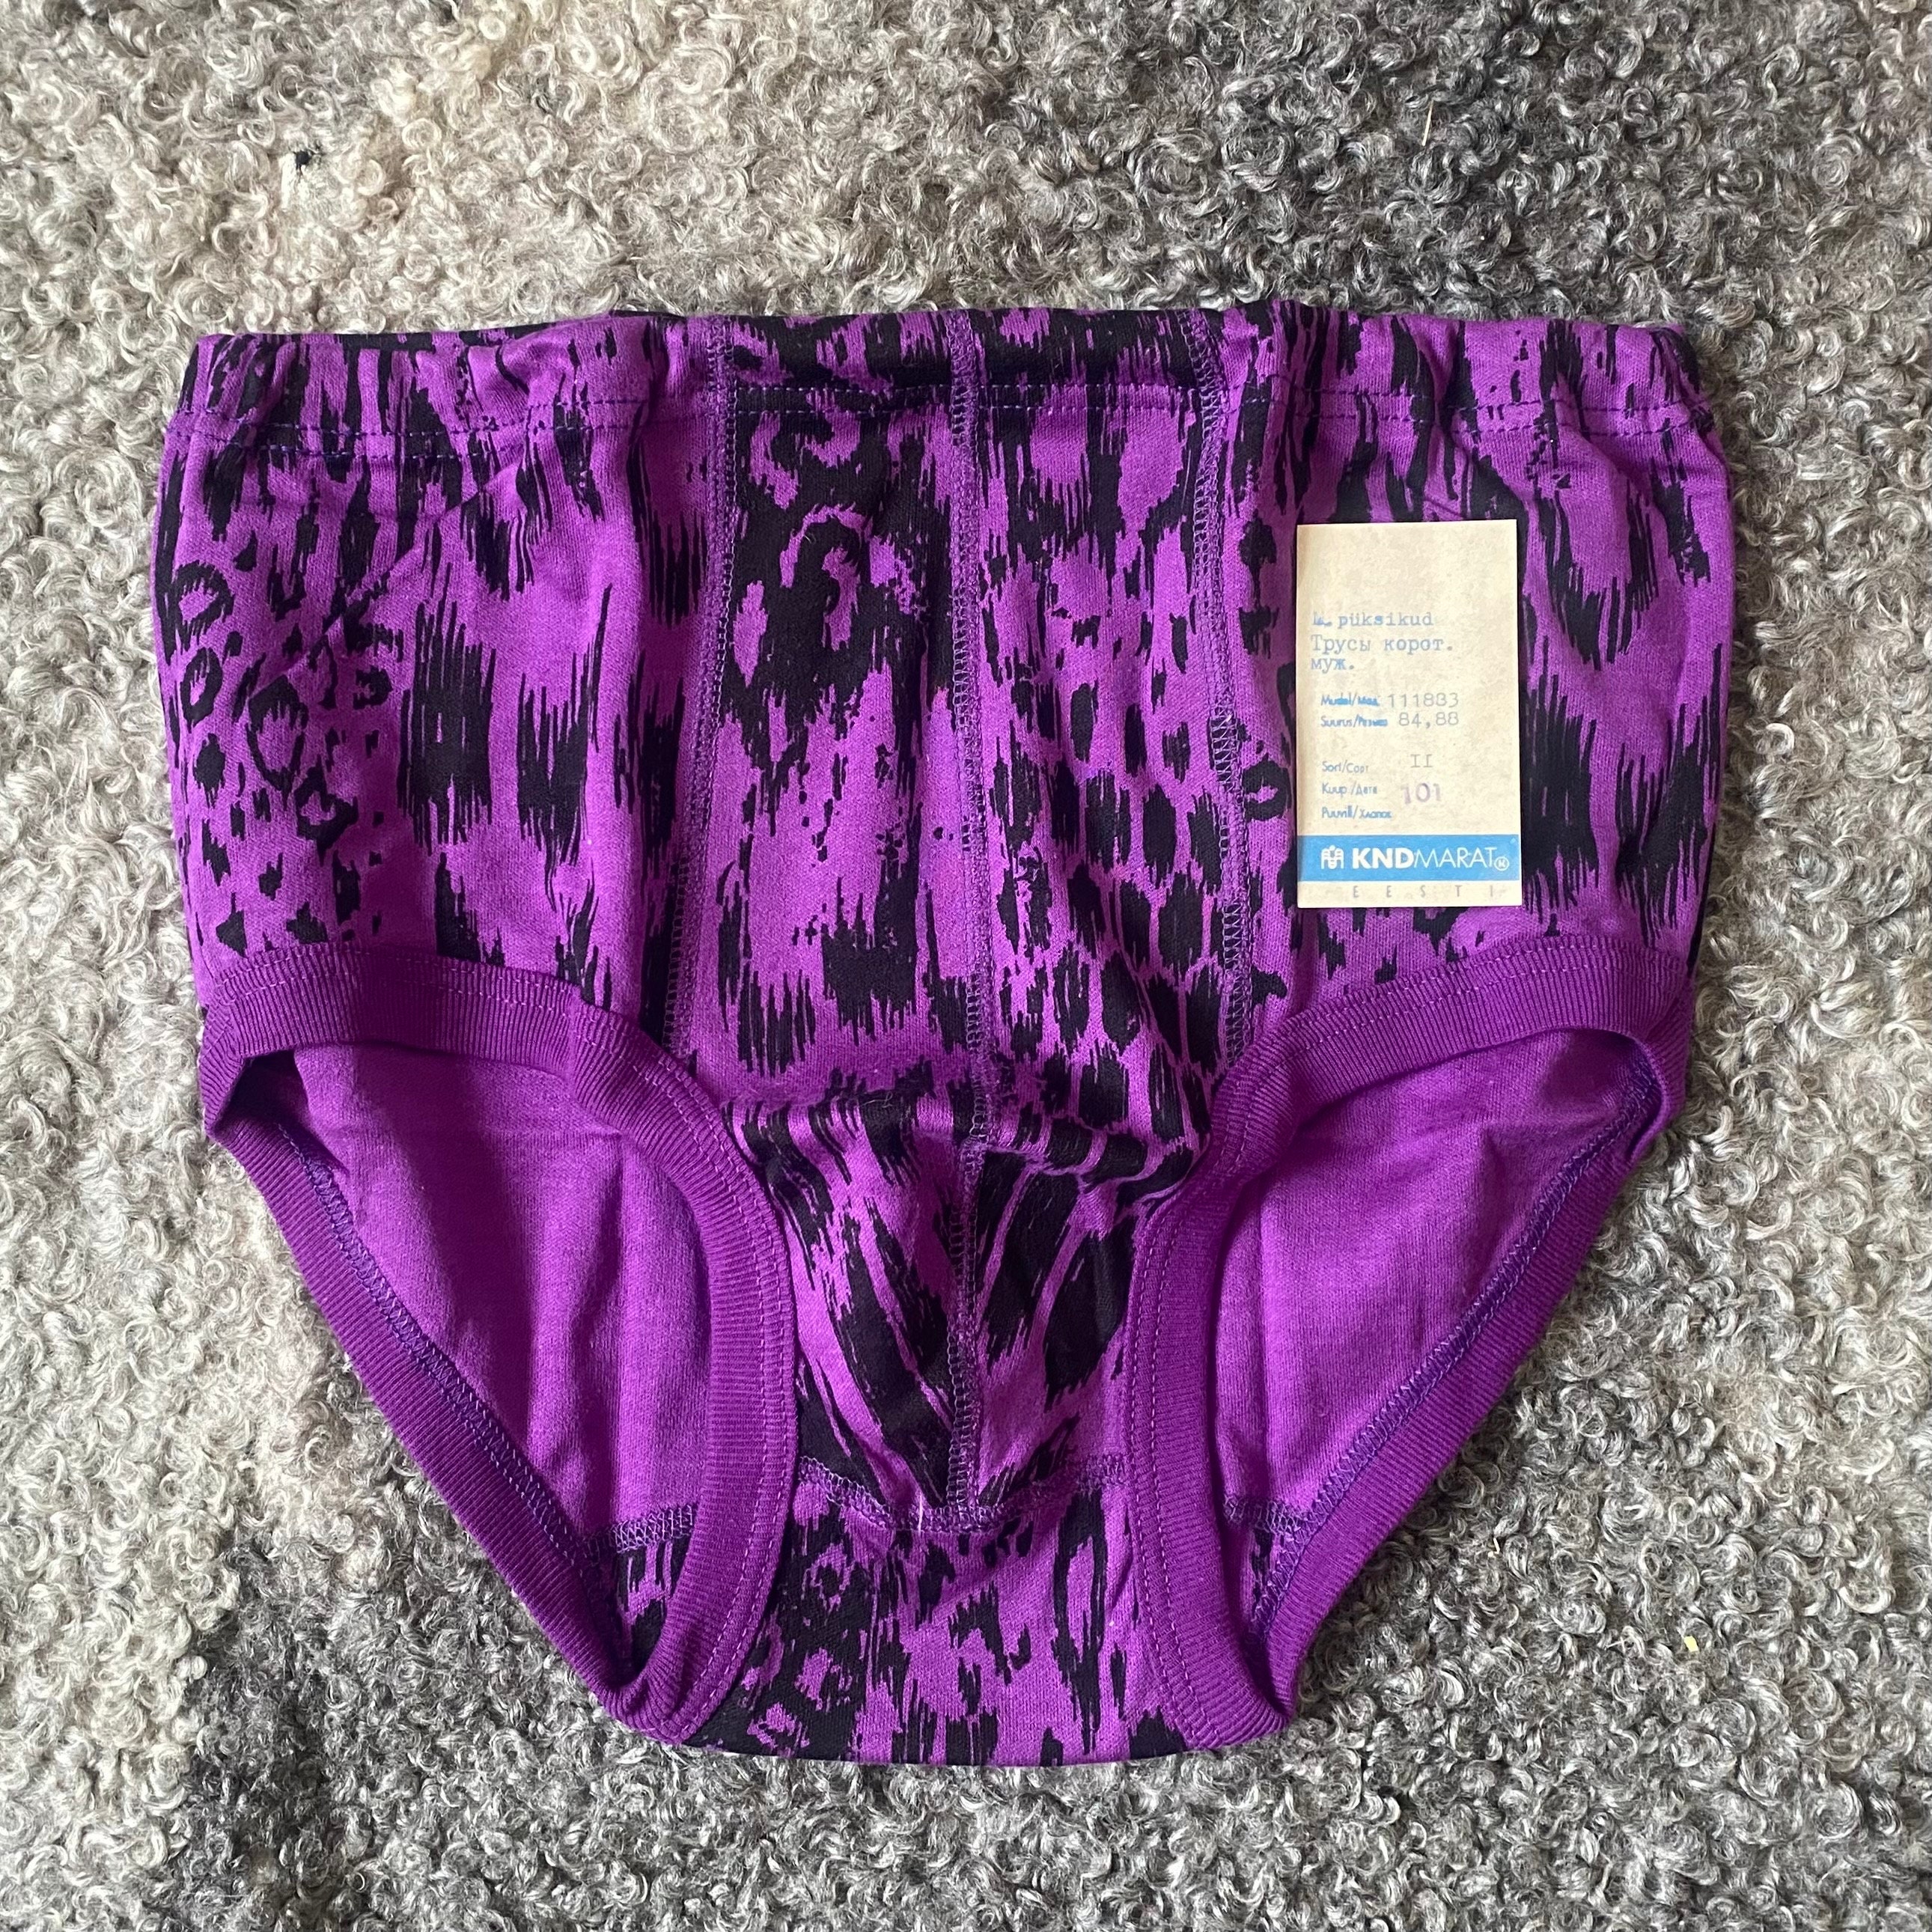 NIP FRUIT OF THE LOOM Size 6 M Purple Brief Cotton Underwear Panties~3  Pairs